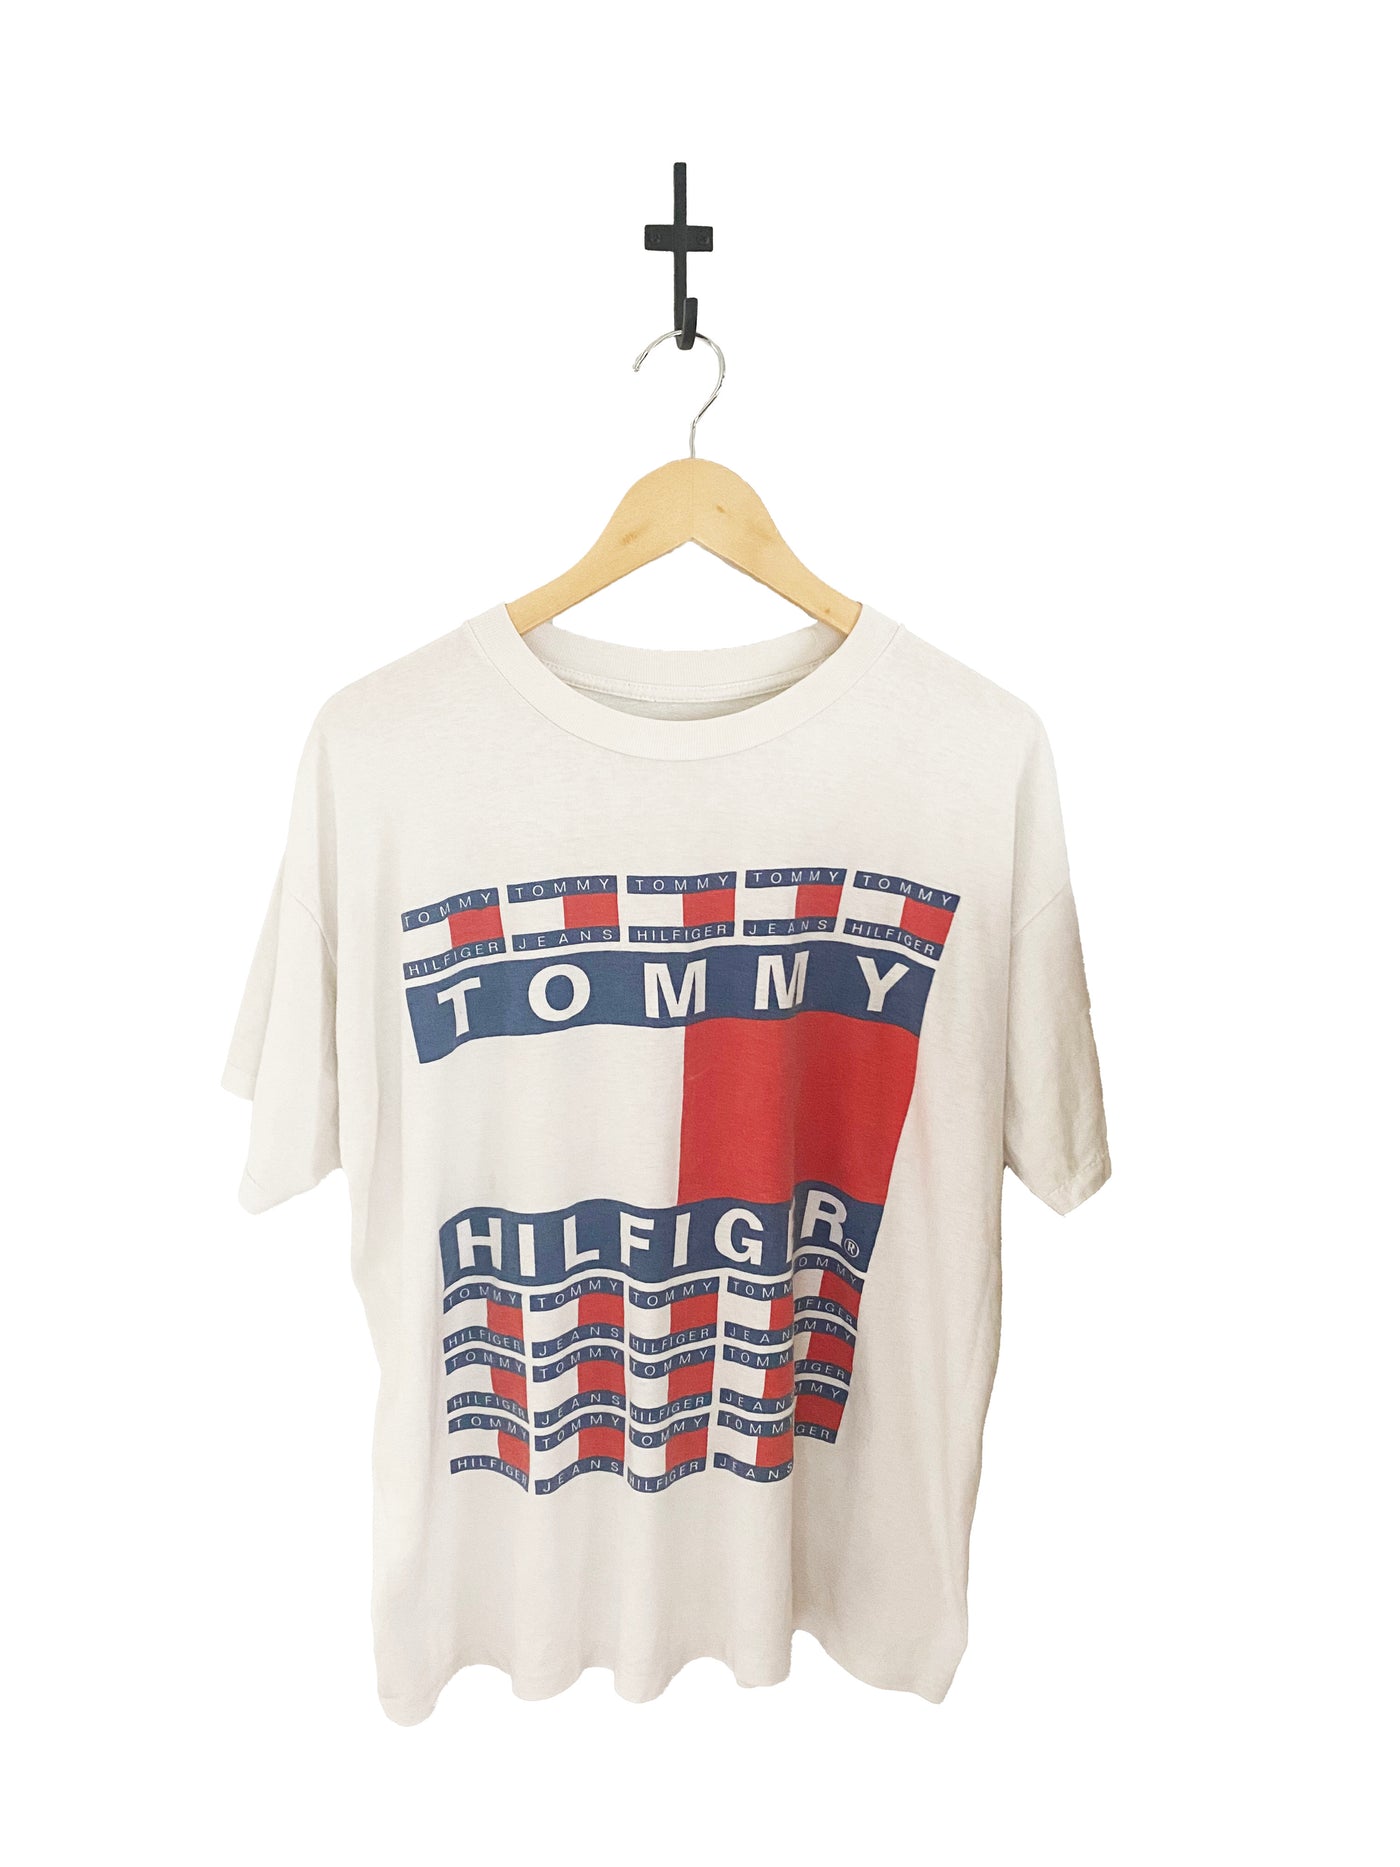 Vintage 90s Tommy Hilfiger Bootleg T-Shirt